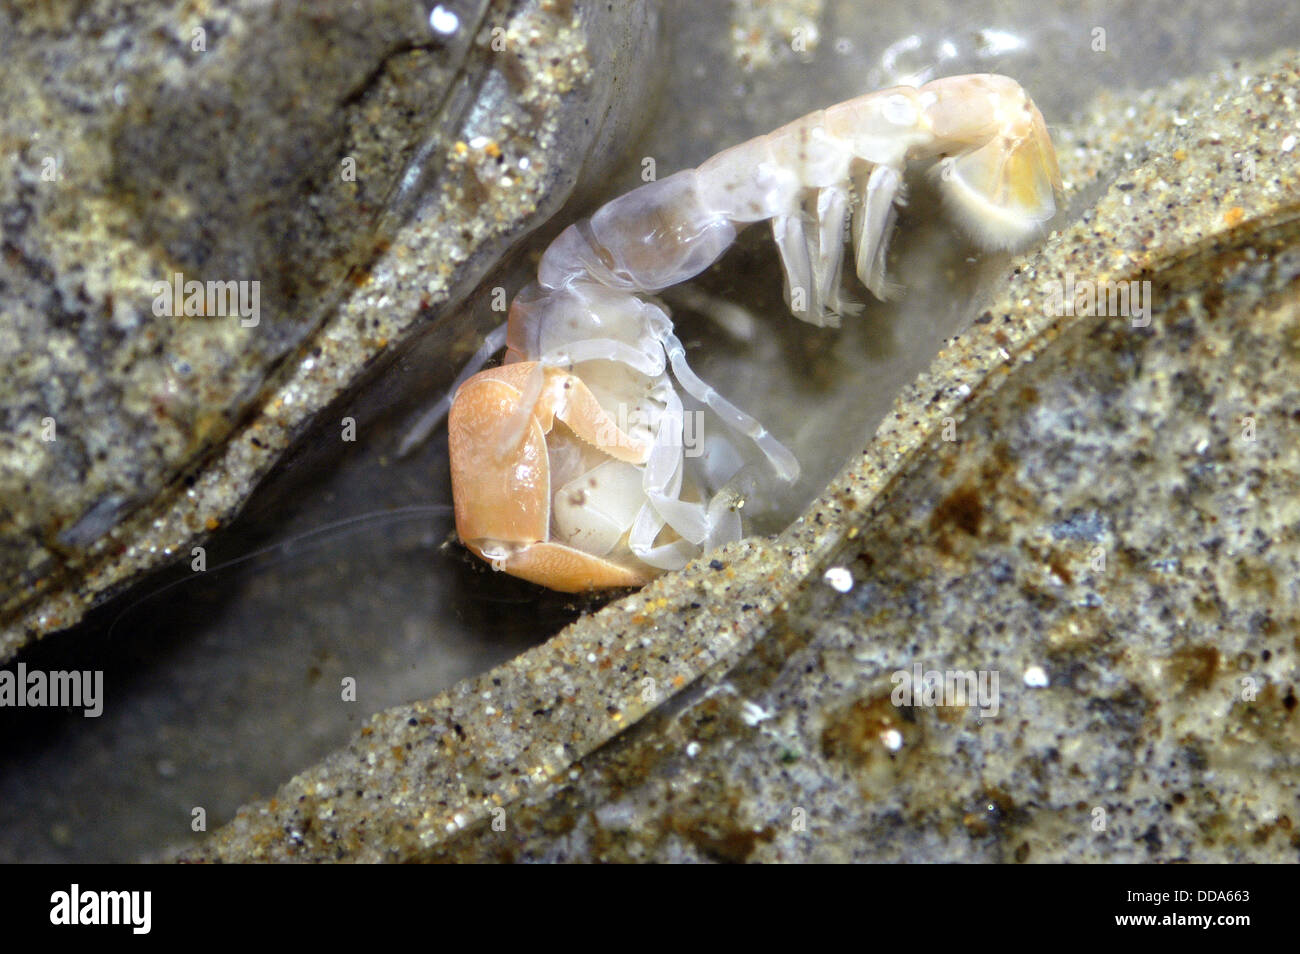 A bay ghost shrimp, Callianassa californiensis. Stock Photo